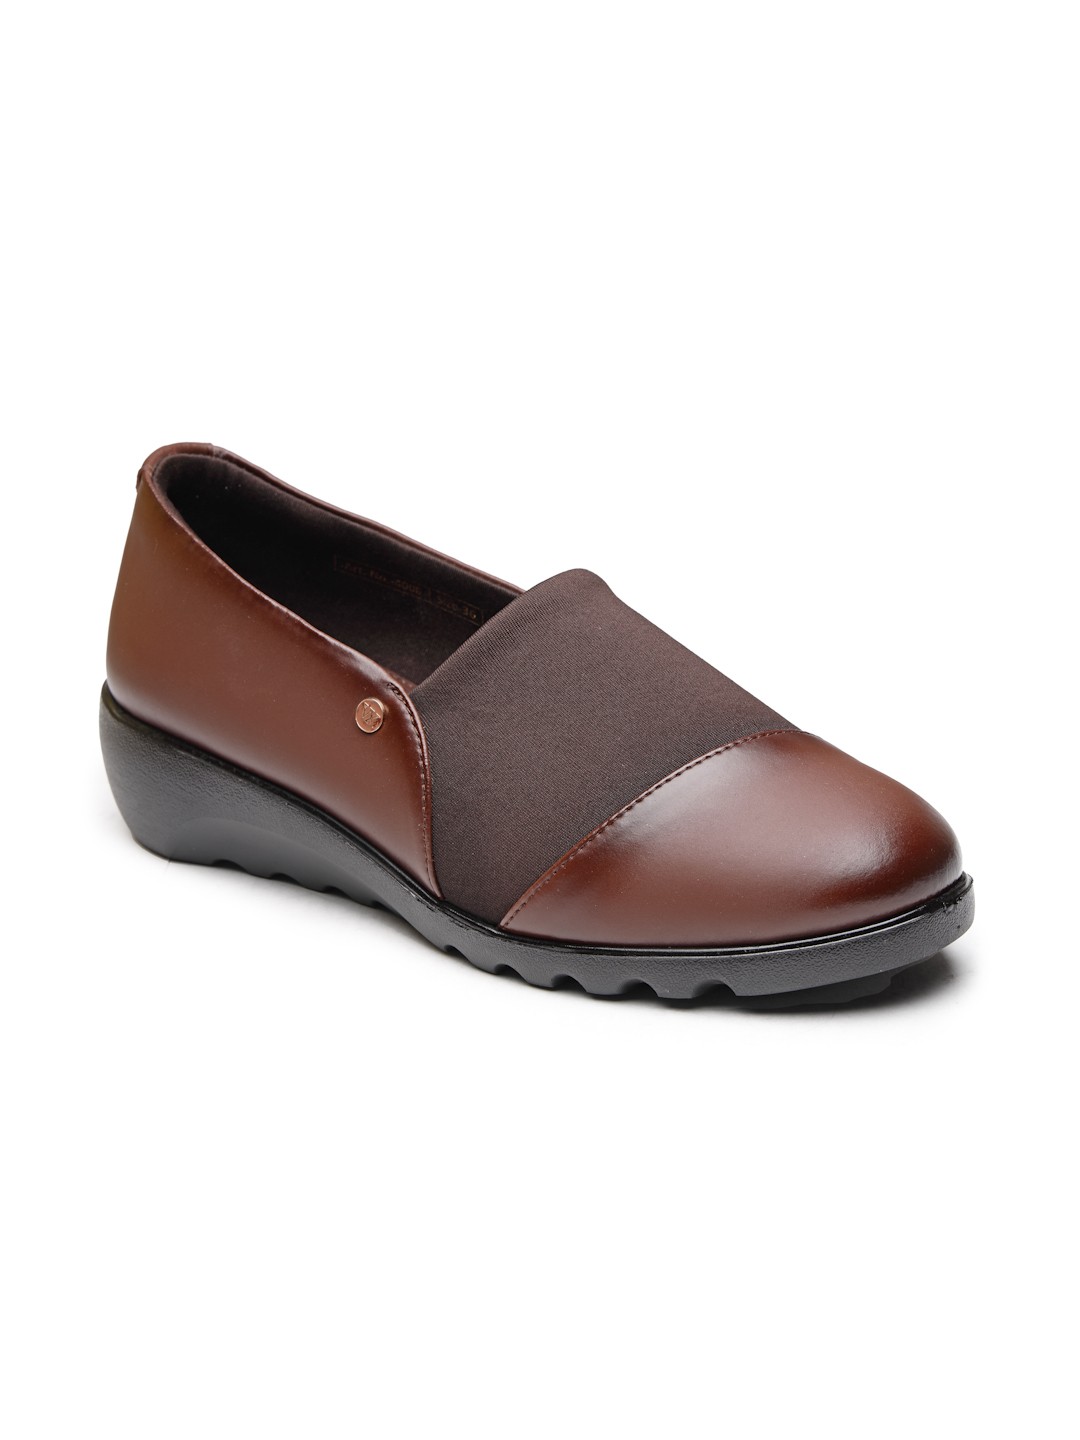 Buy Von Wellx Germany Comfort Women's Brown Casual Shoes Ayla Online in Visakhapatnam